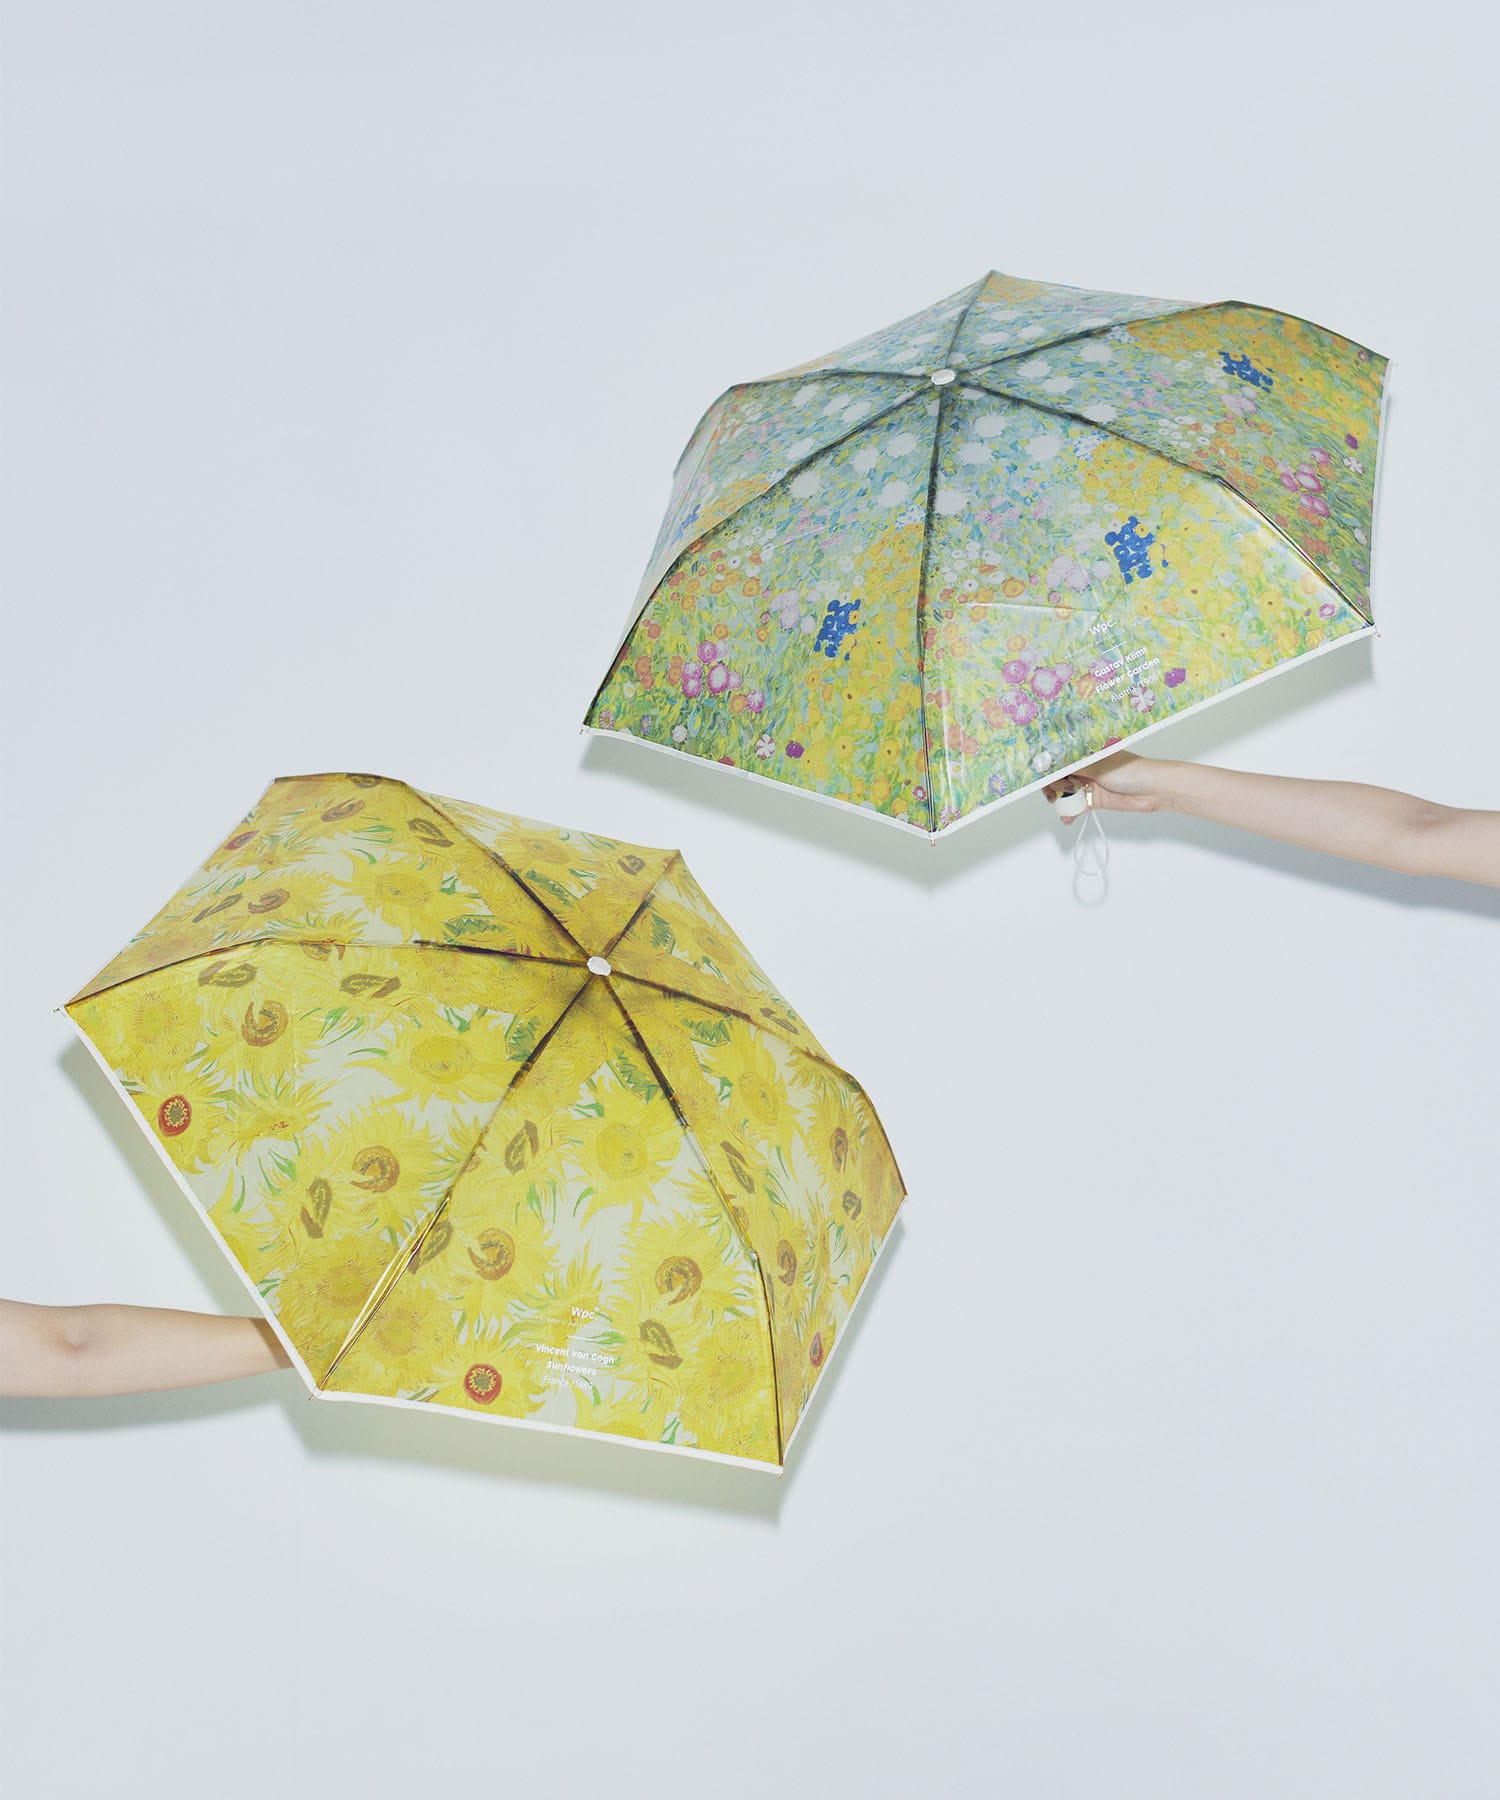 【Wpc.】MUSEUM 折り畳みビニール傘